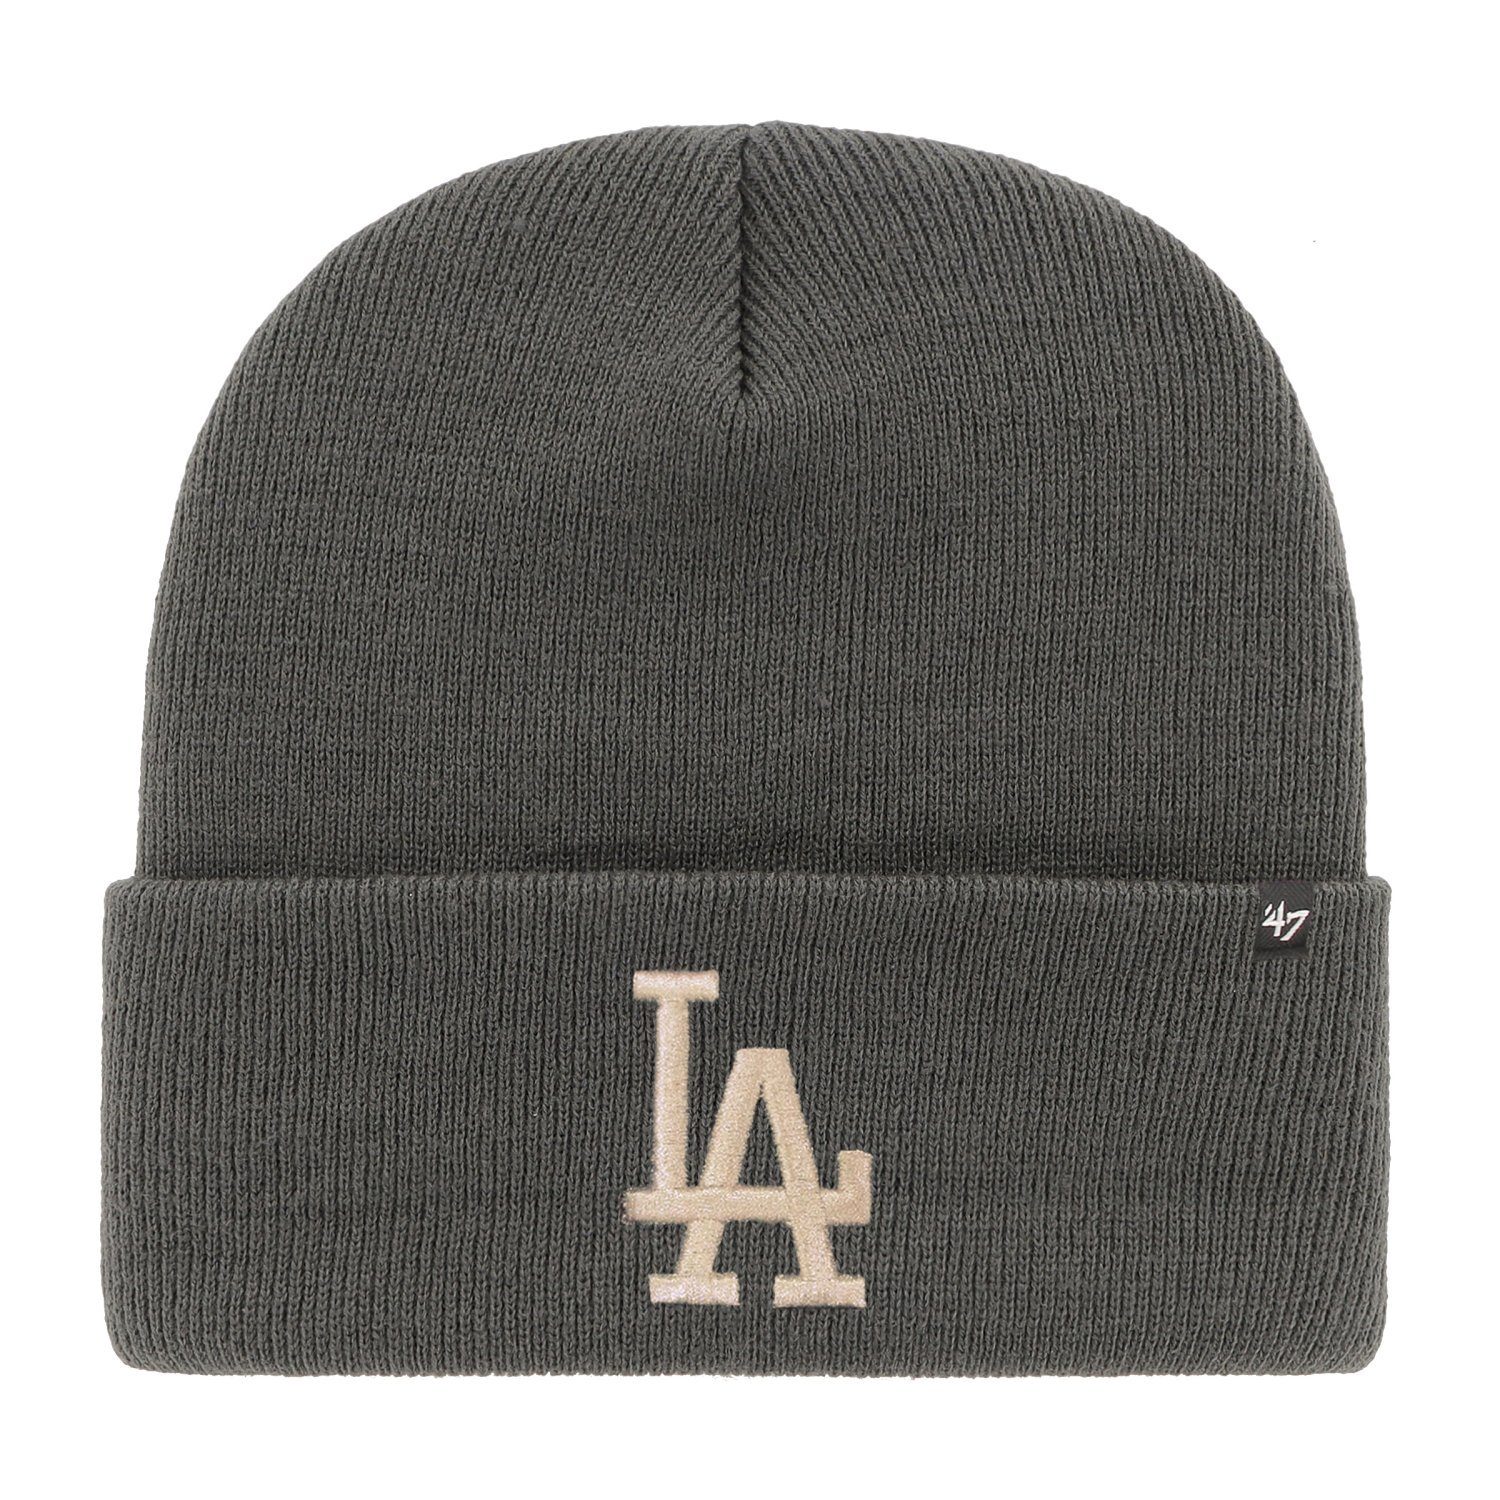 '47 Brand Fleecemütze Beanie HAYMAKER Los Angeles Dodgers